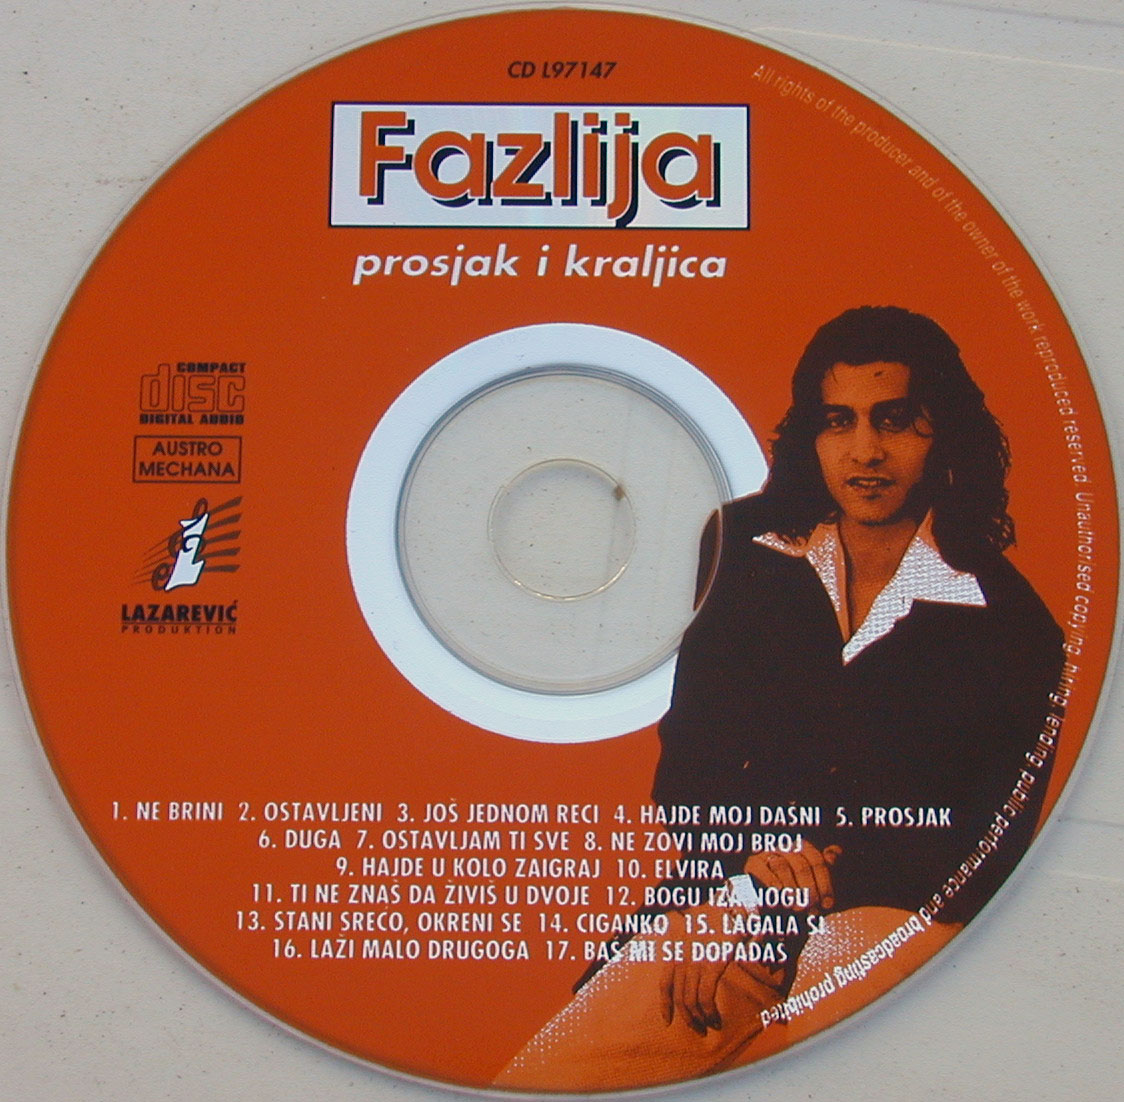 Fazlija 1997 CD